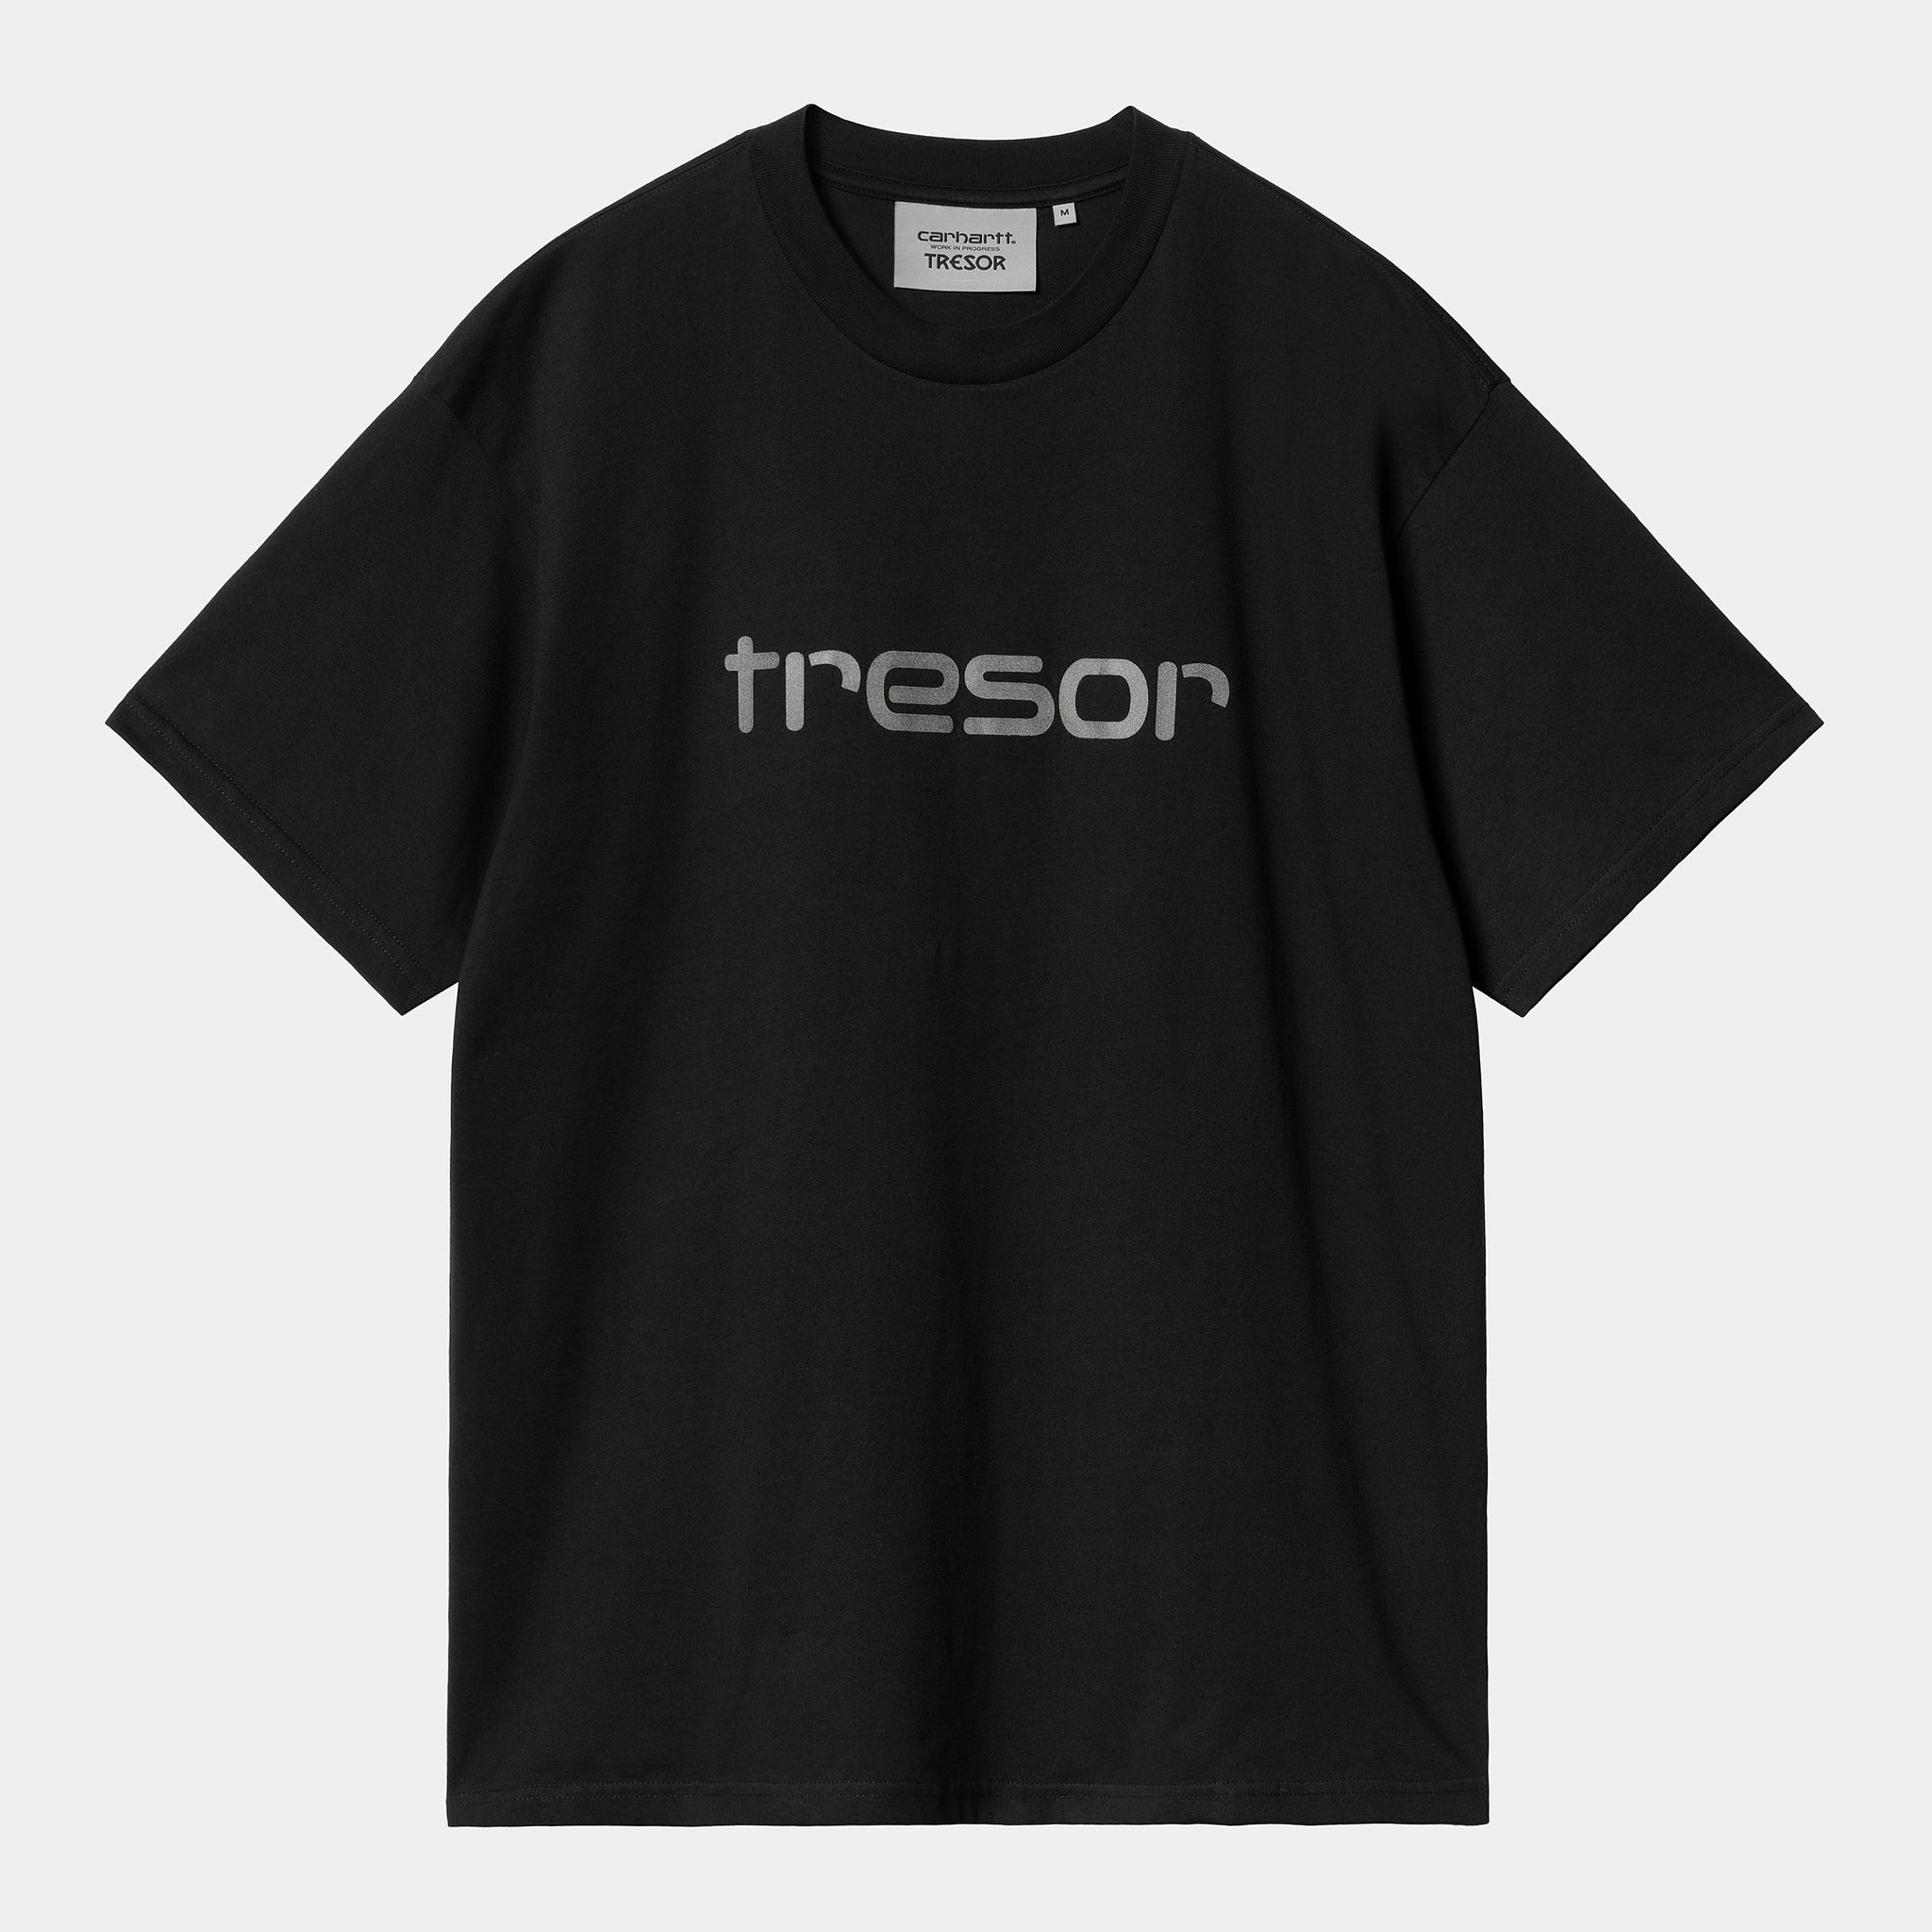 Carhartt WIP x Tresor Techno Alliance S/S T-Shirt Black / Glow Green